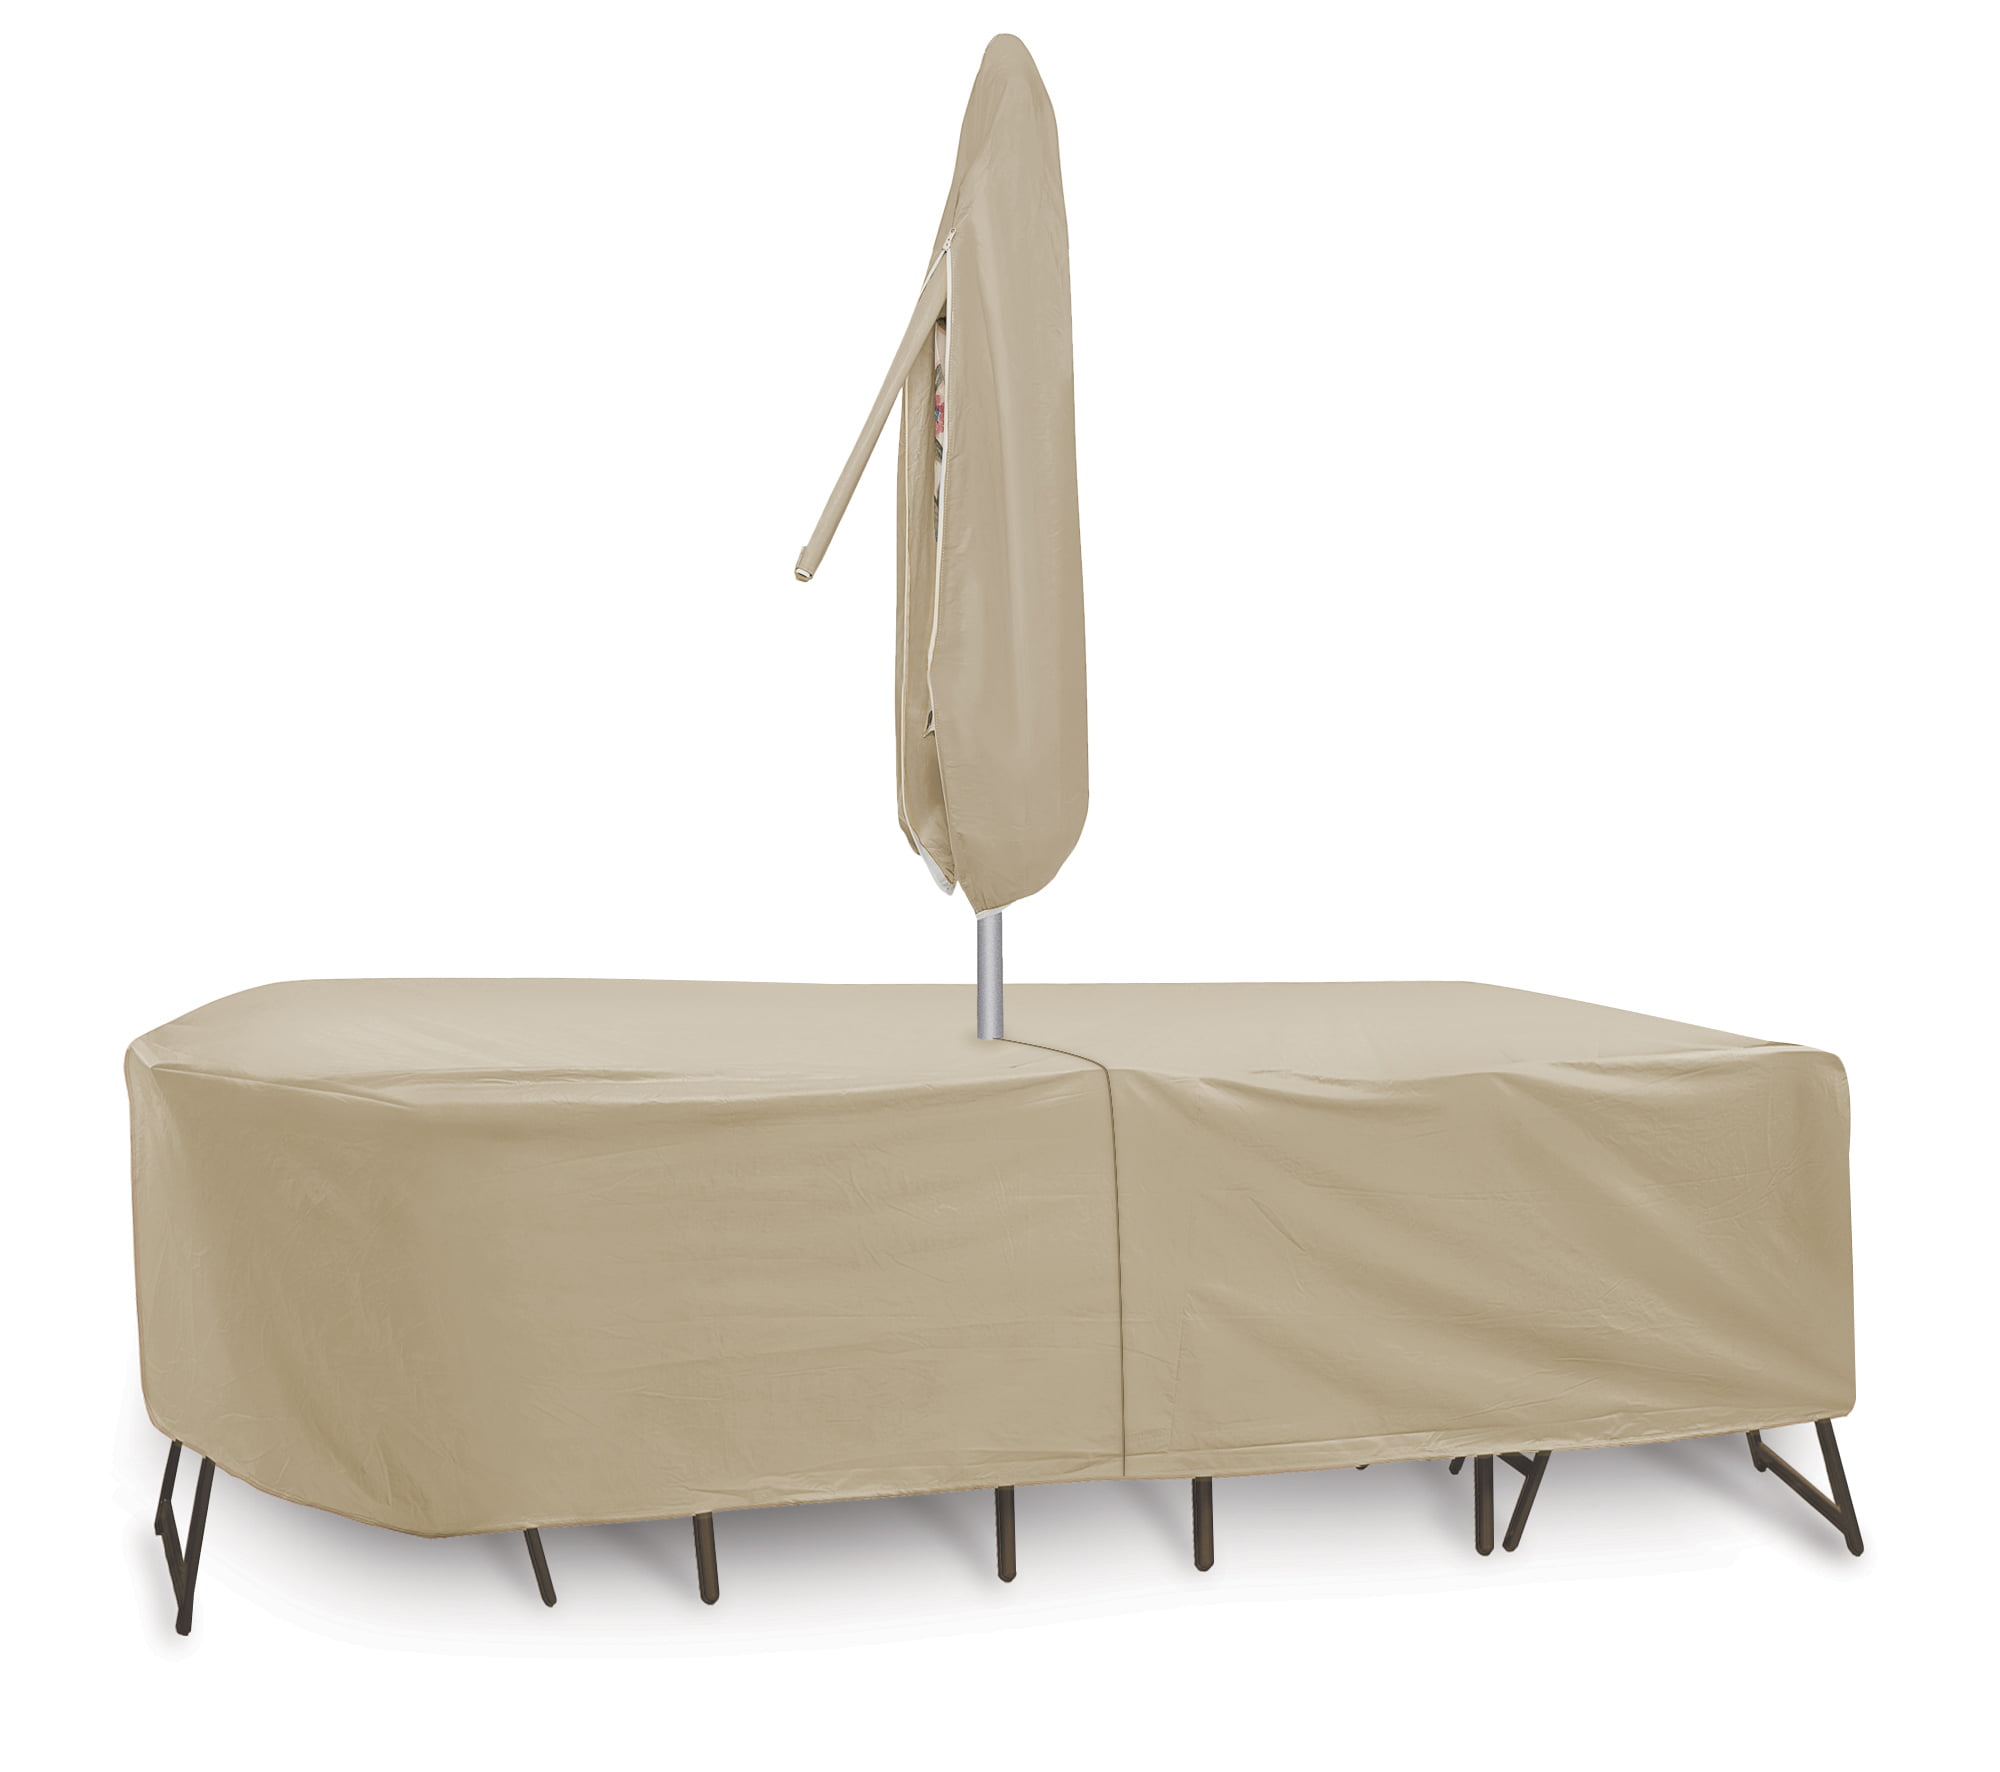 Medium Classic Accessories Veranda Rect/Oval Patio Table & Chair Set Cover W/Umbrella Hole